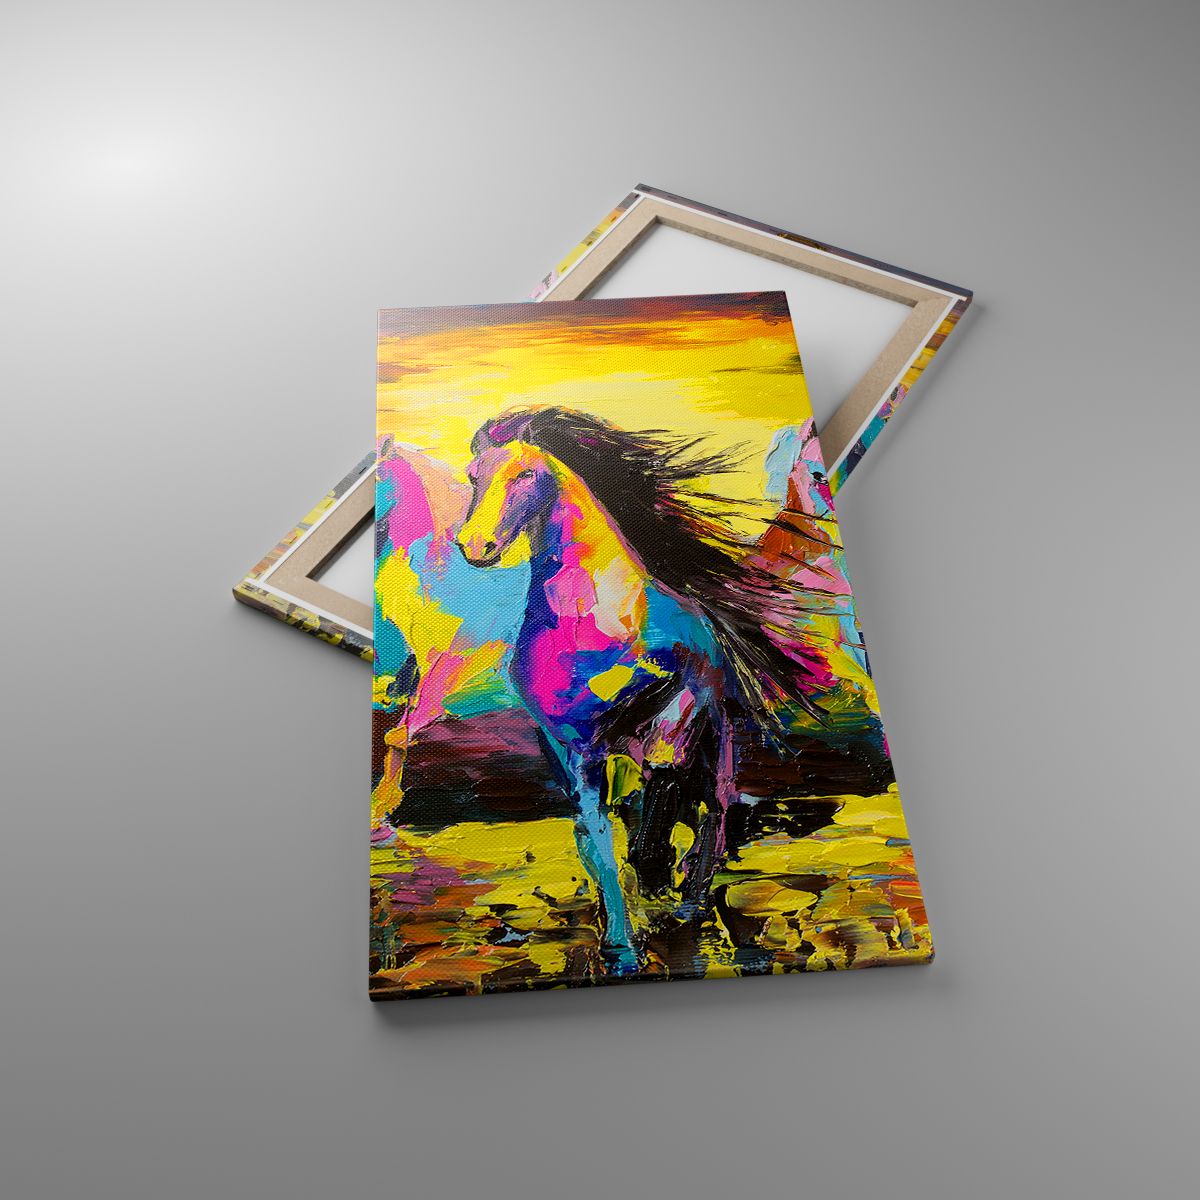 Leinwandbild Tiere, Leinwandbild Die Pferde, Leinwandbild Freiheit, Leinwandbild Kunst, Leinwandbild Abstraktion